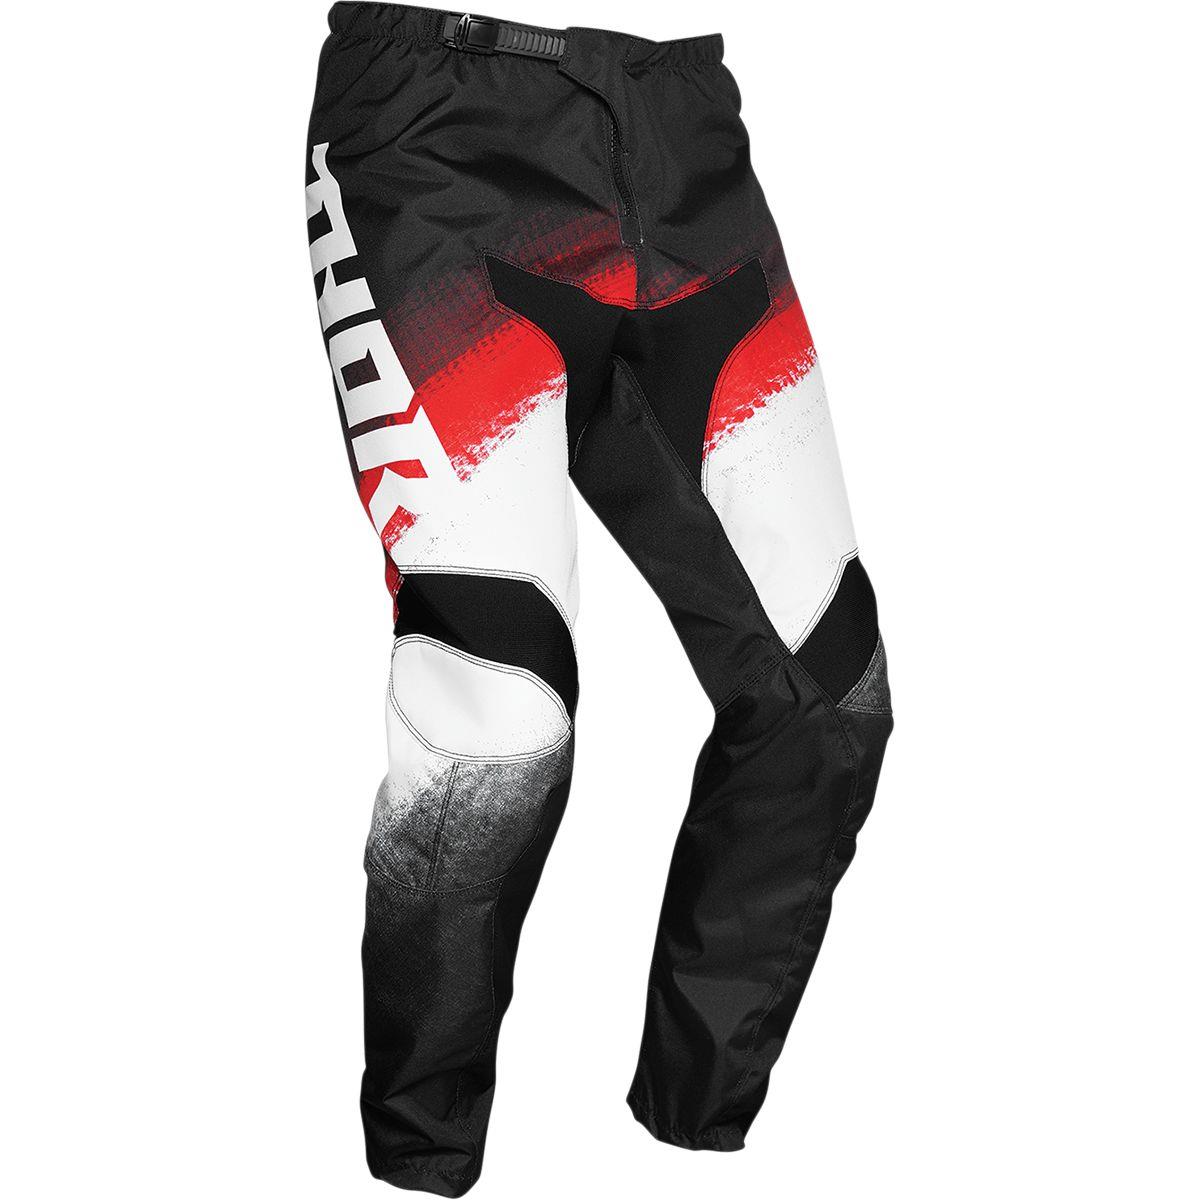 Black THOR MX Motocross Kids 2018 SECTOR ZONES Pants Choose Size